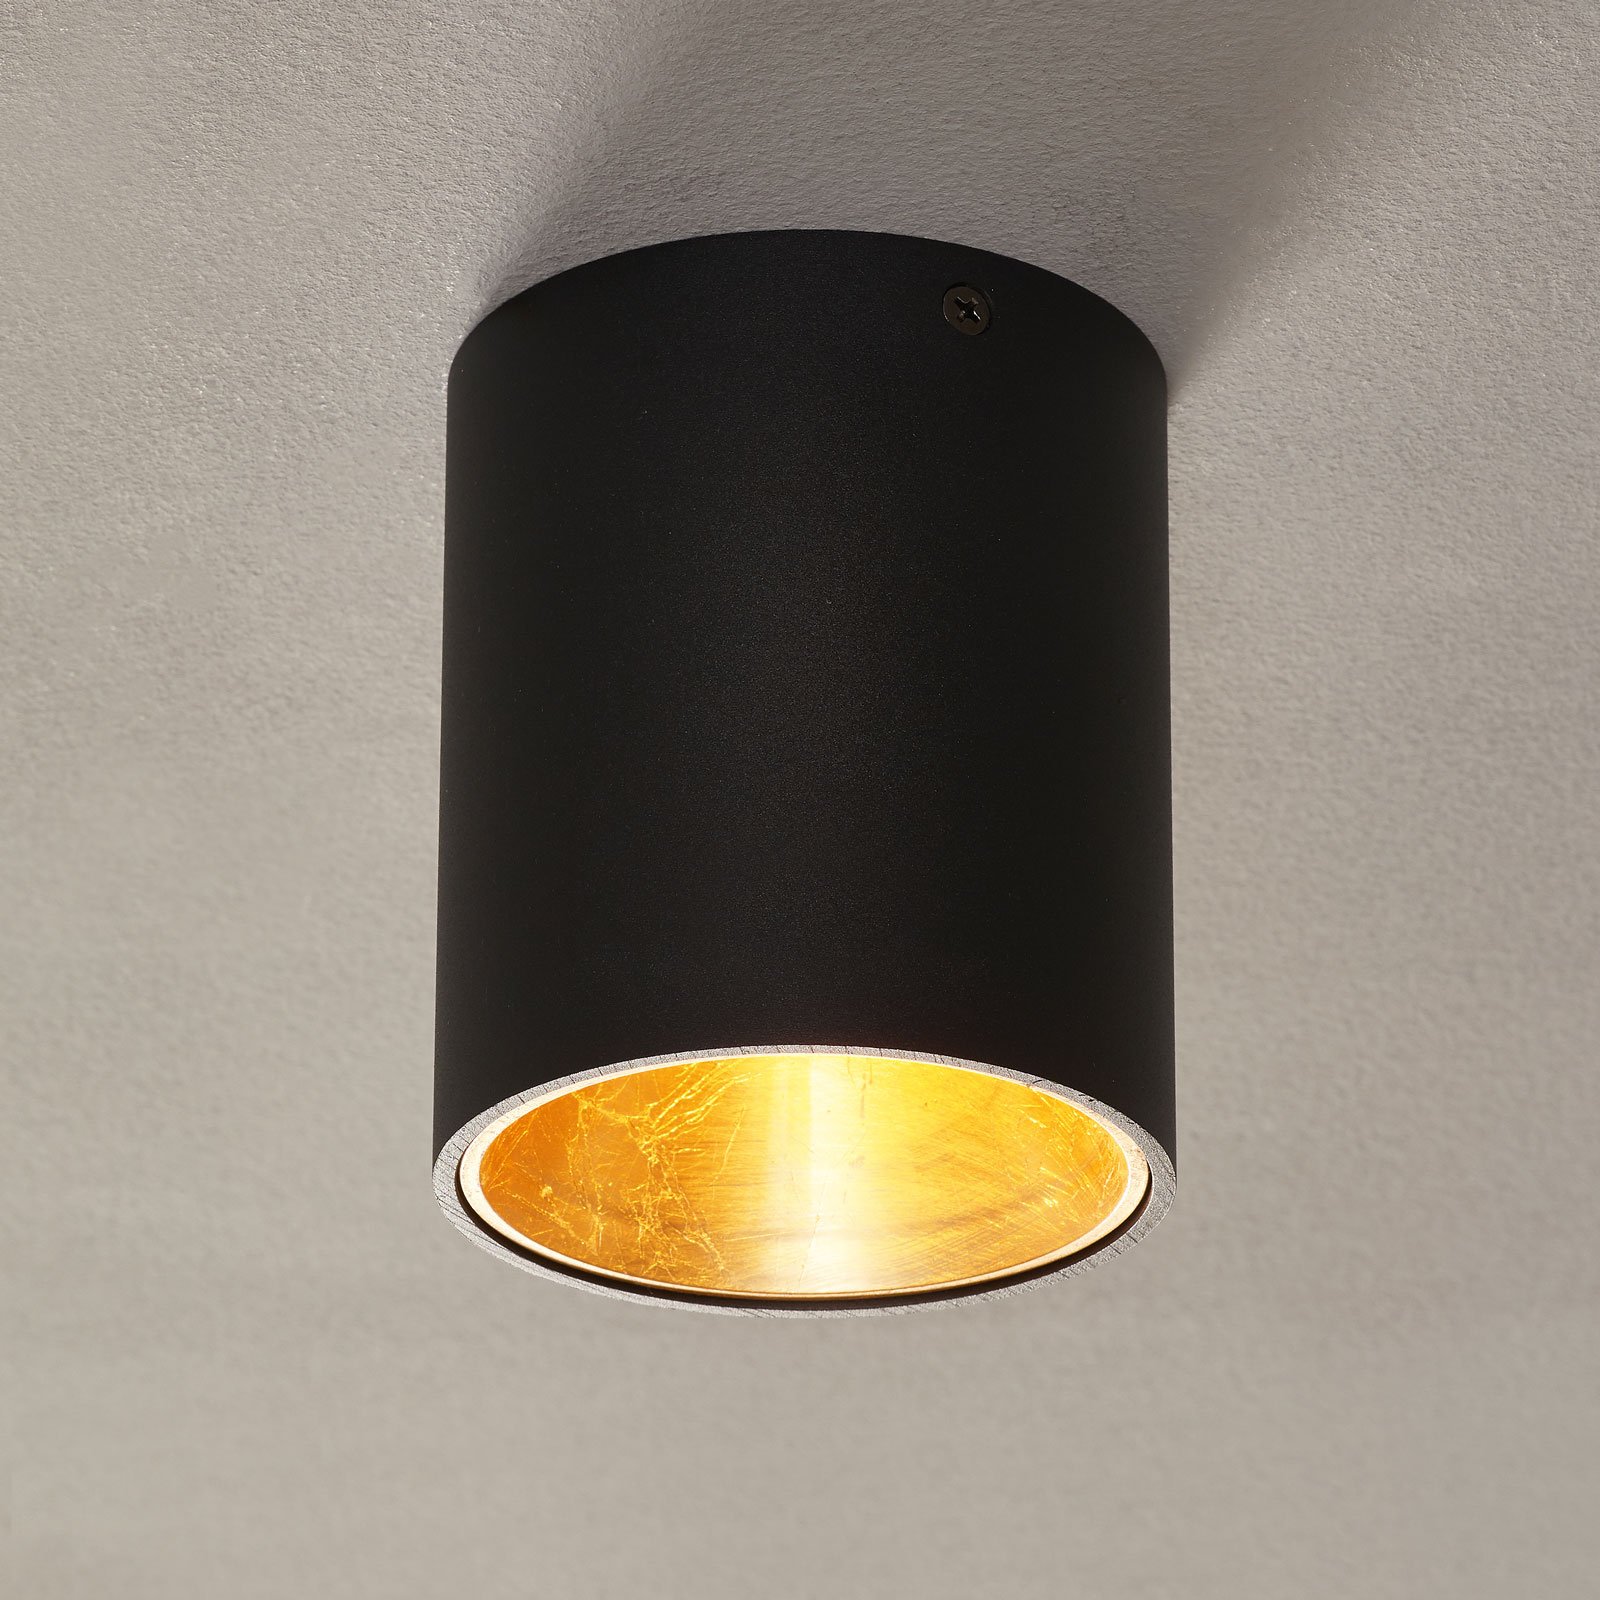 Лампа за таван Polasso LED, кръгла, черно-златиста